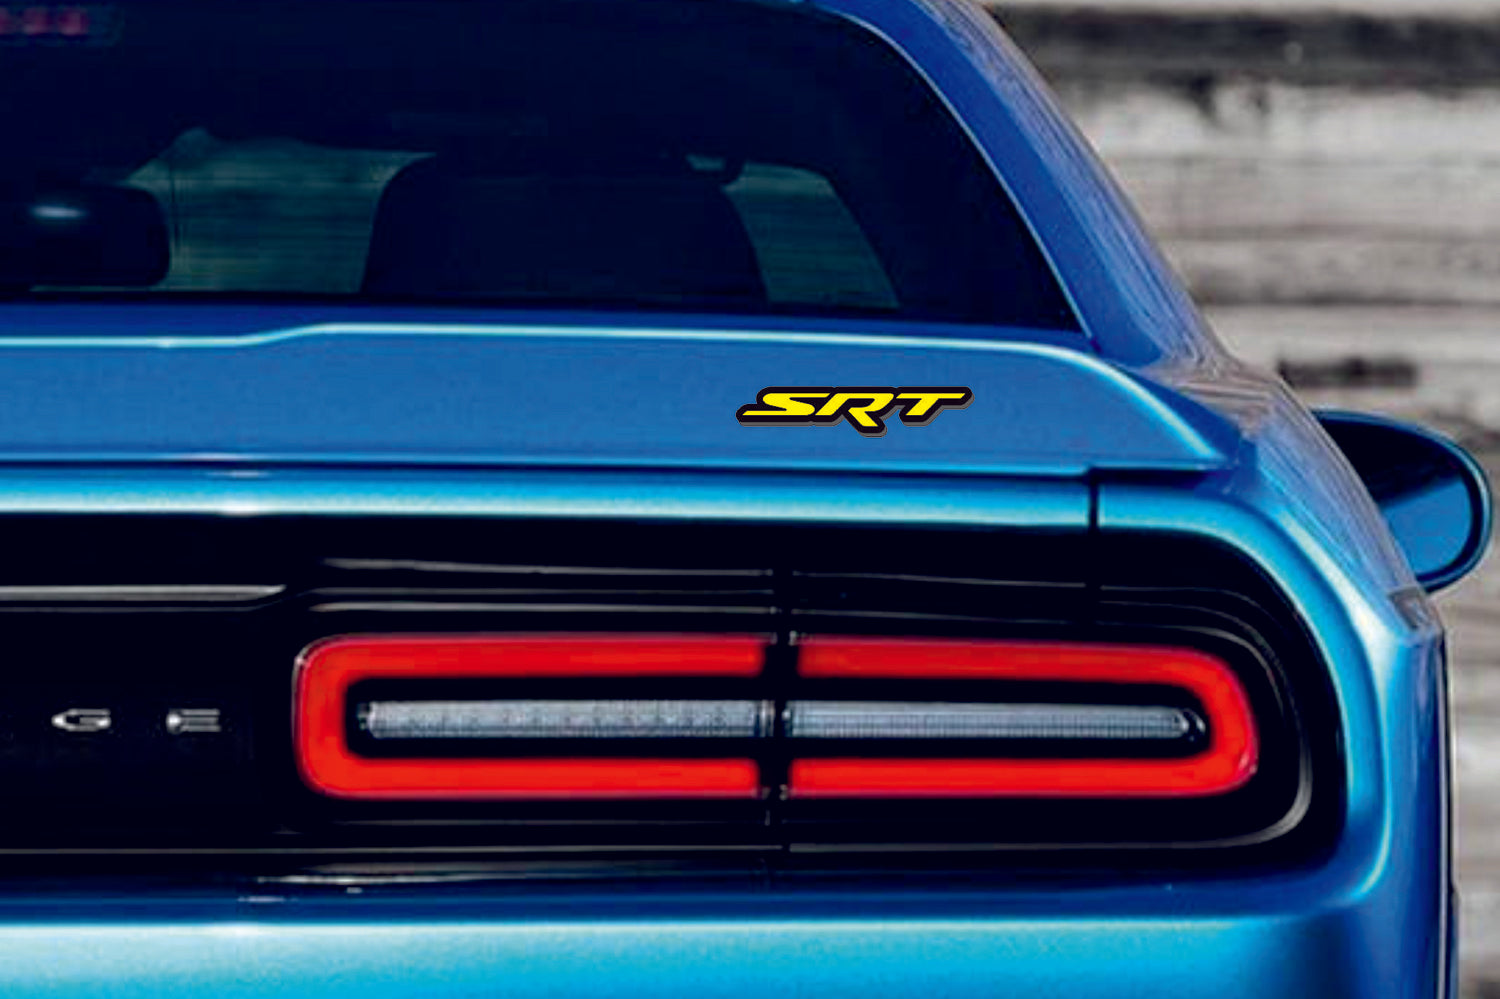 Chrysler tailgate trunk rear emblem with SRT logo - decoinfabric